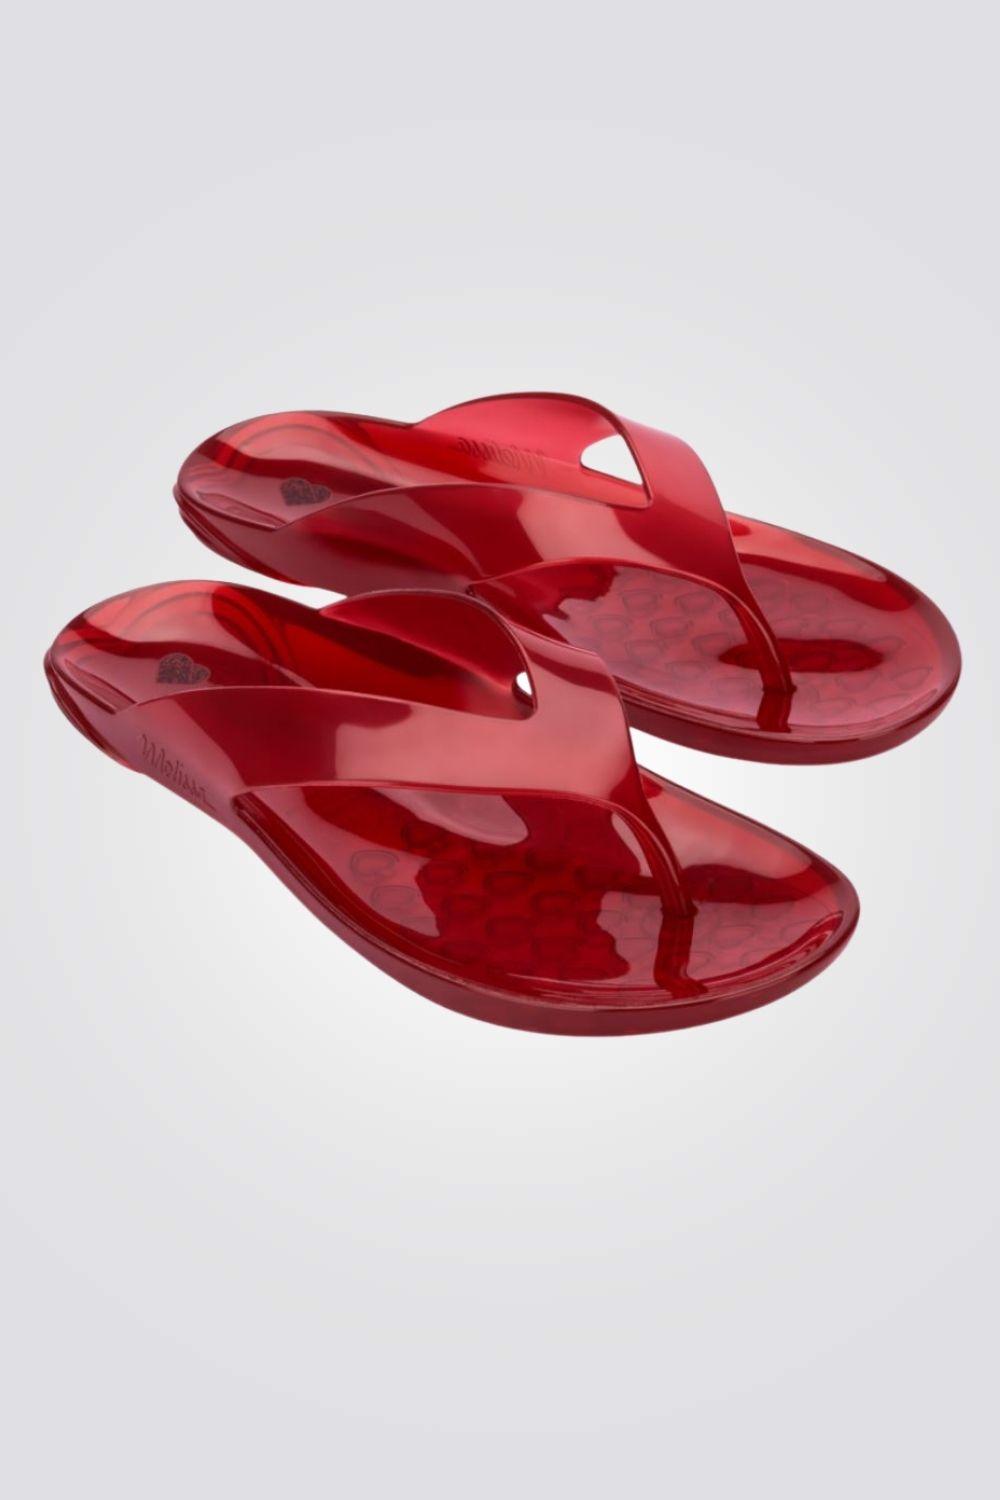 MELISSA - כפכפים THE REAL JELLY FLIP FL בצבע אדום - MASHBIR//365